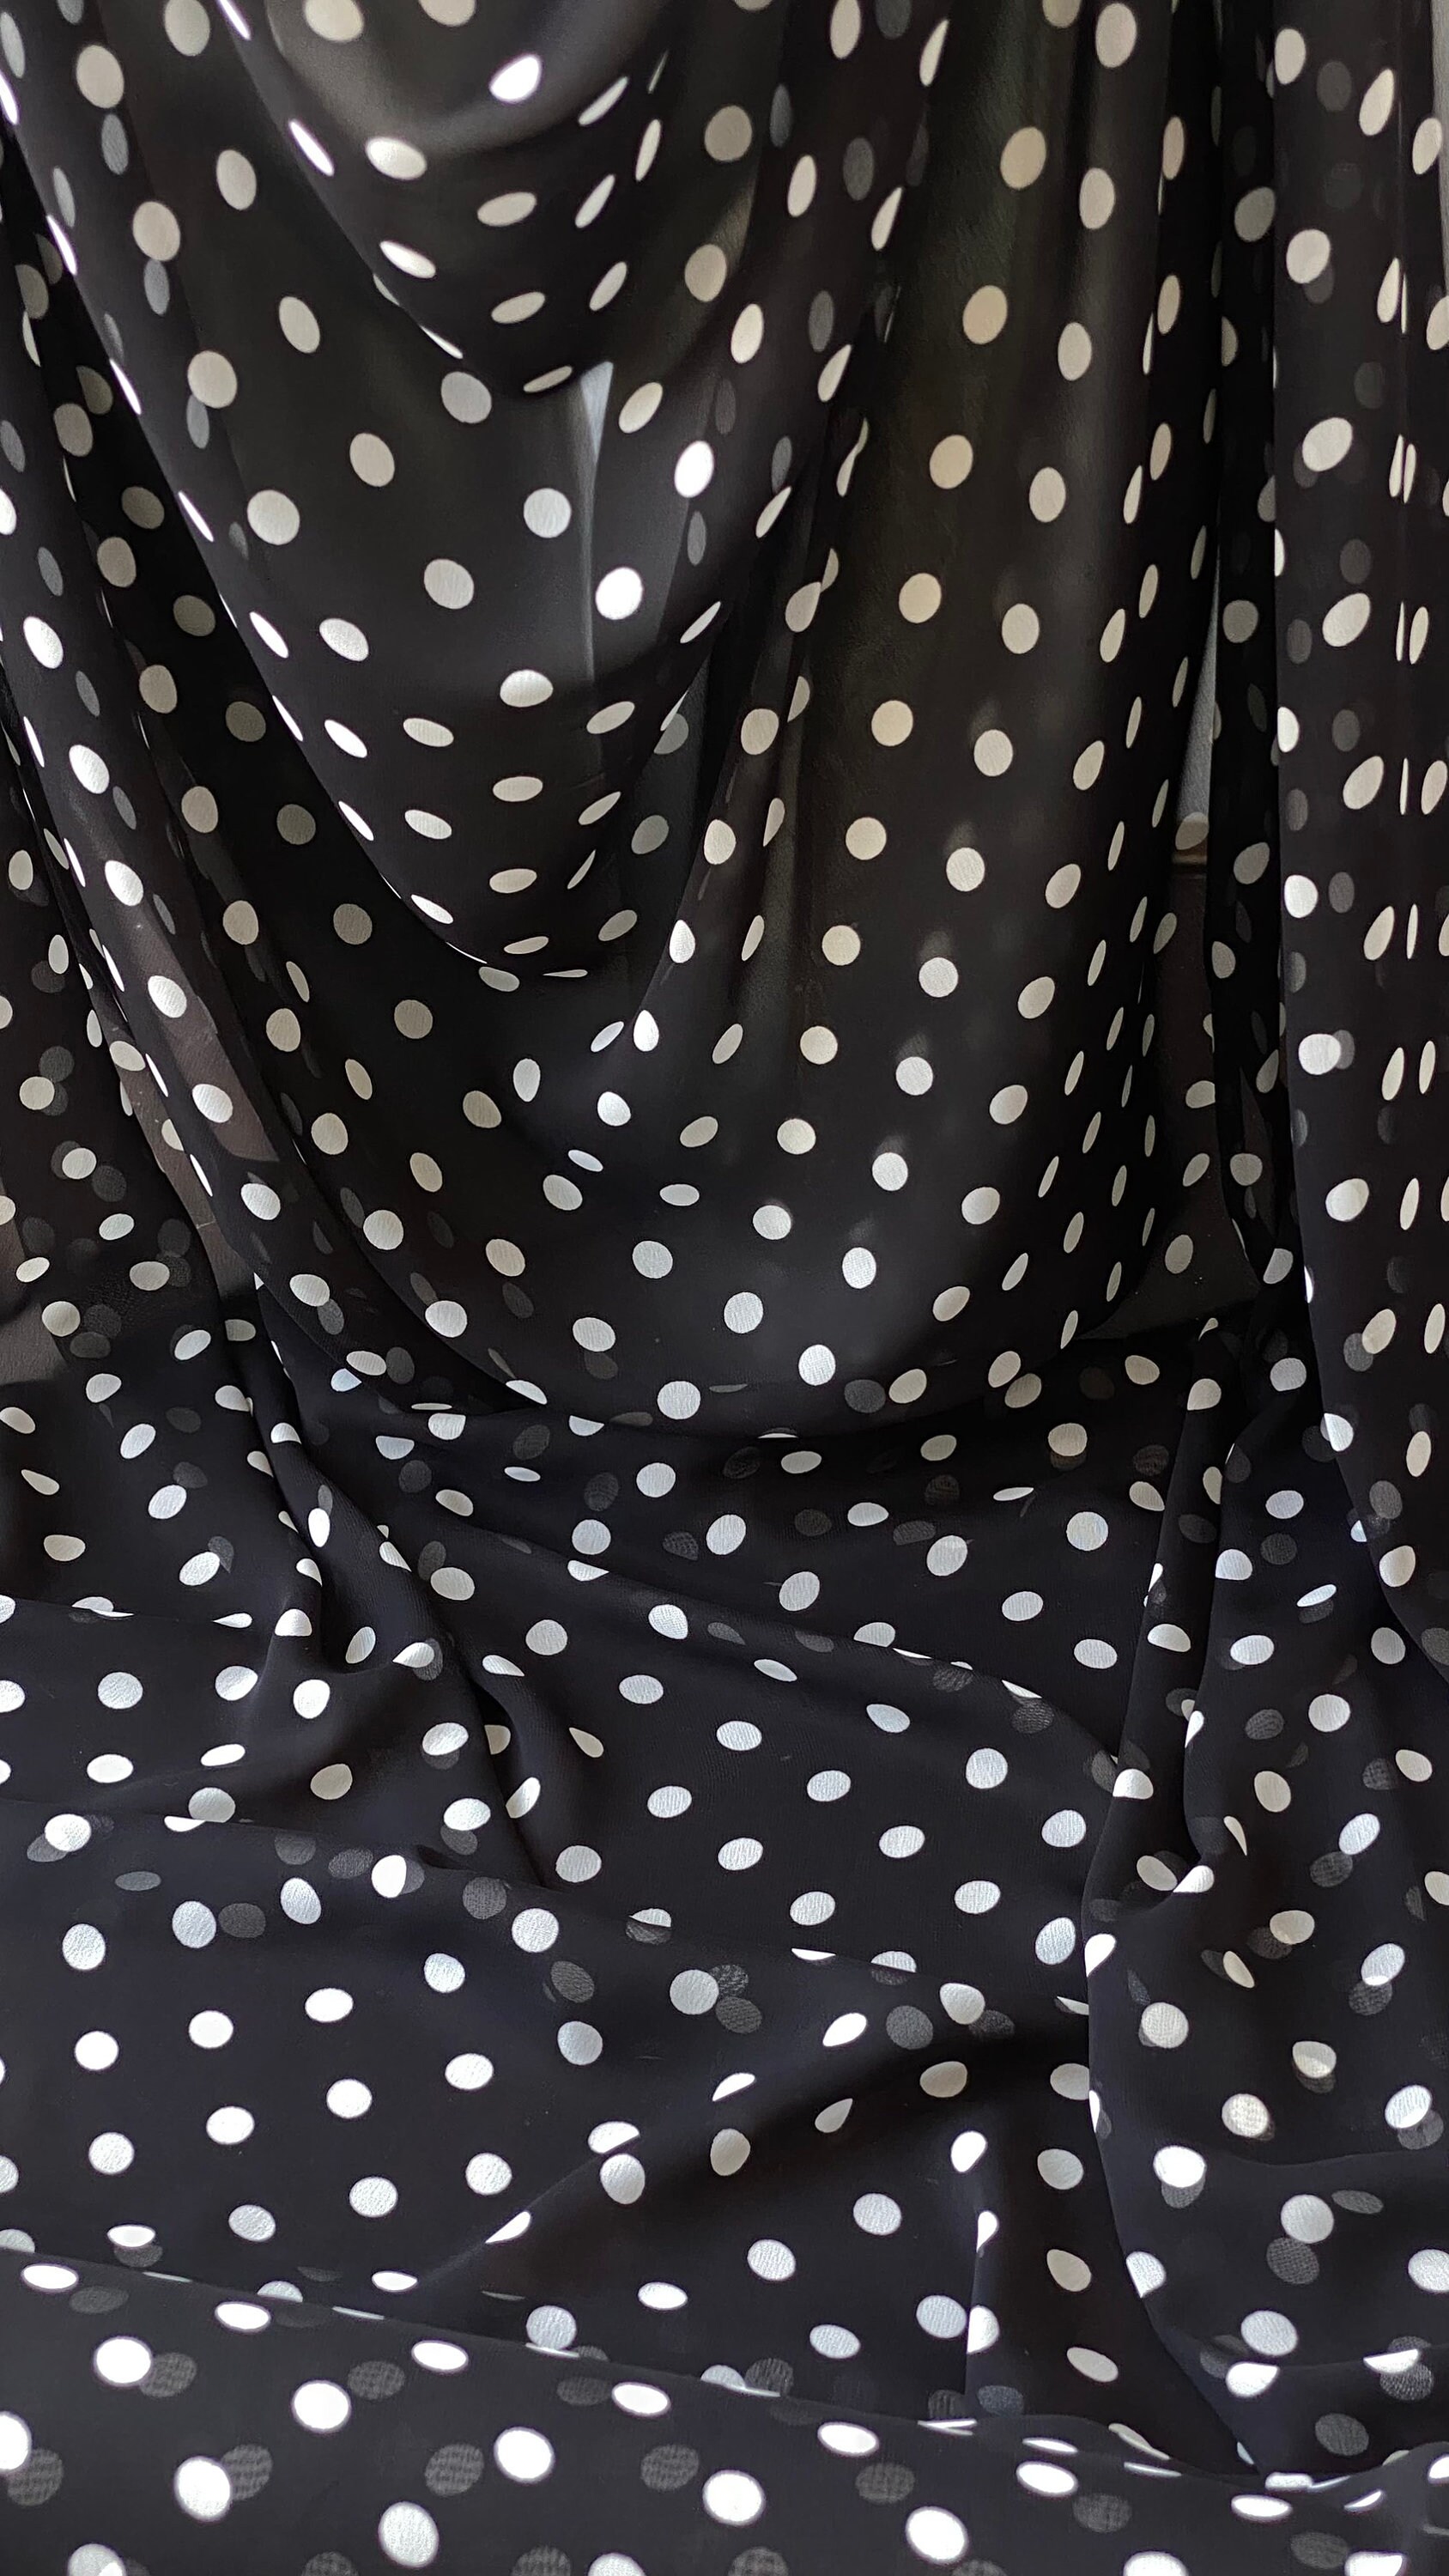 Polka Dot Chiffon Fabric Black and White Spots Fabric Polka - Etsy